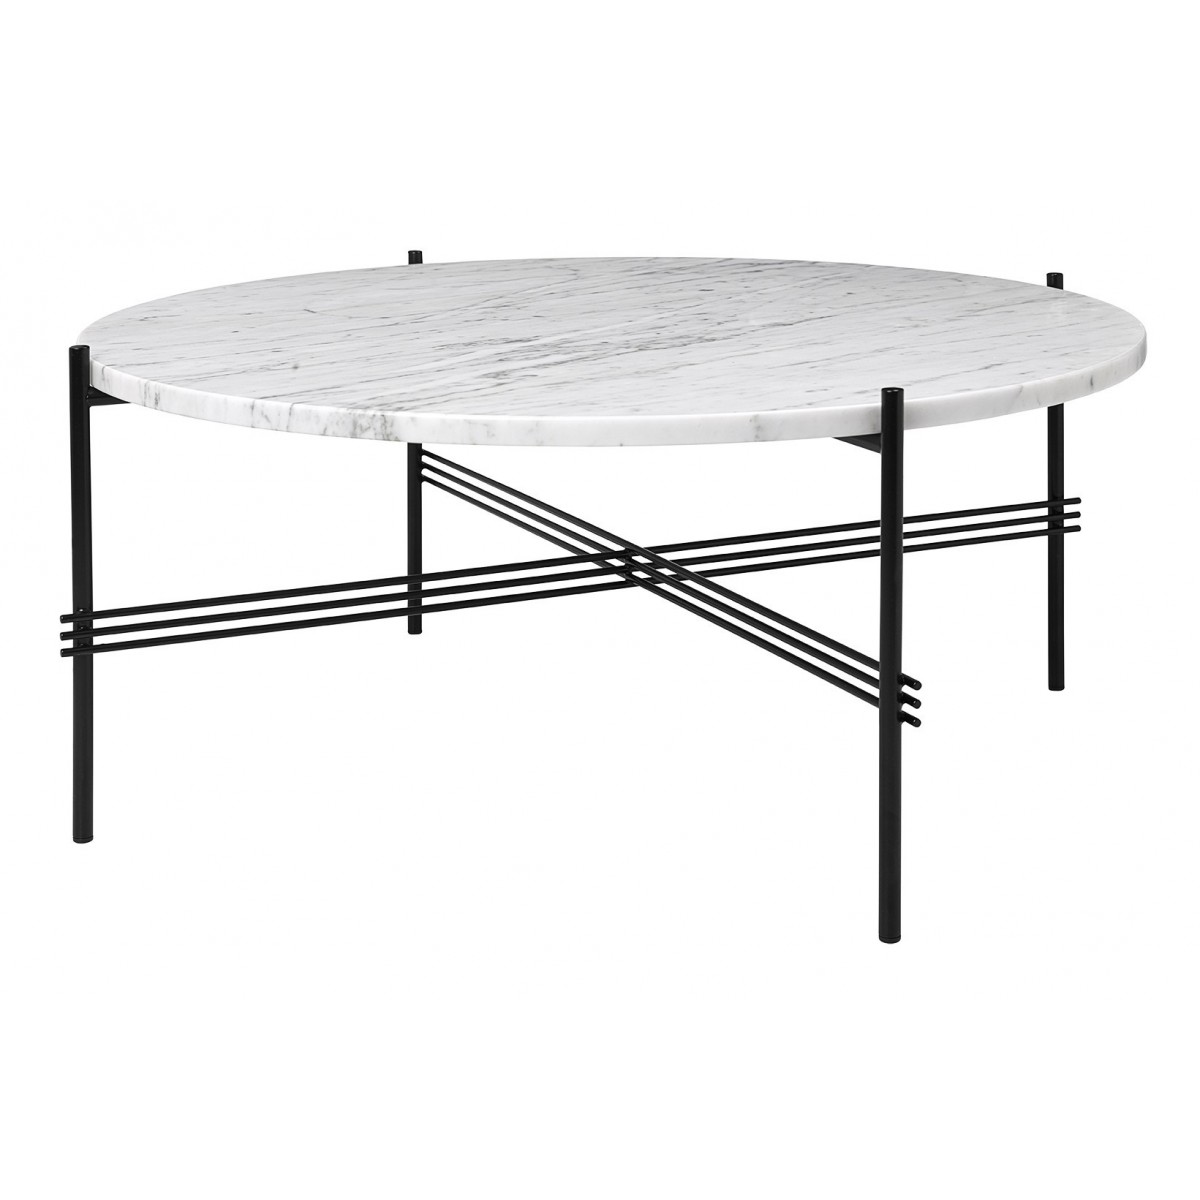 Ø80xH35cm - white marble - black base - TS round table*